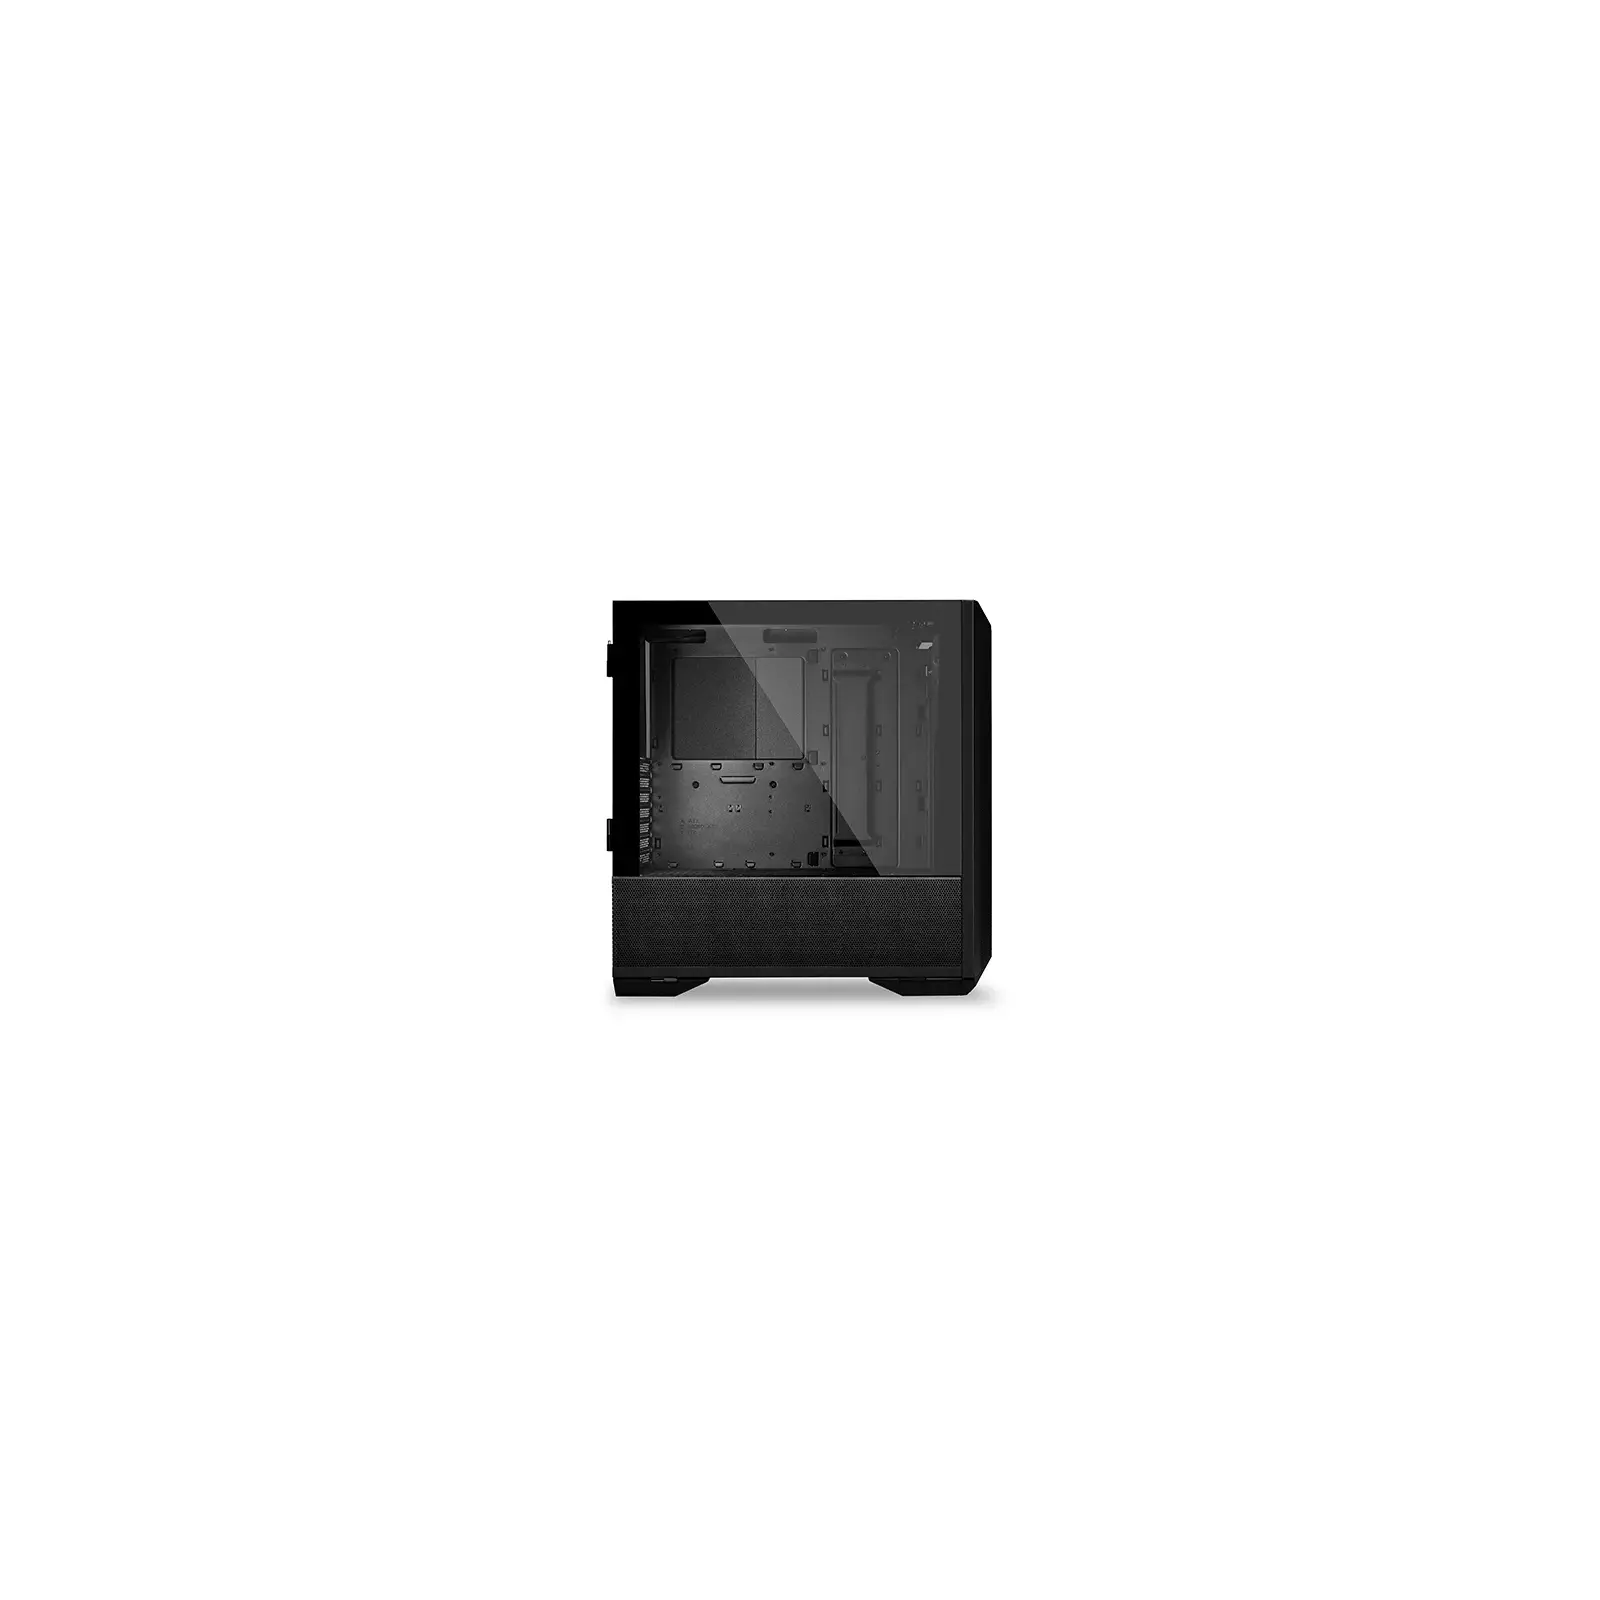 lian li Lancool II mesh C RGB black Photo 6